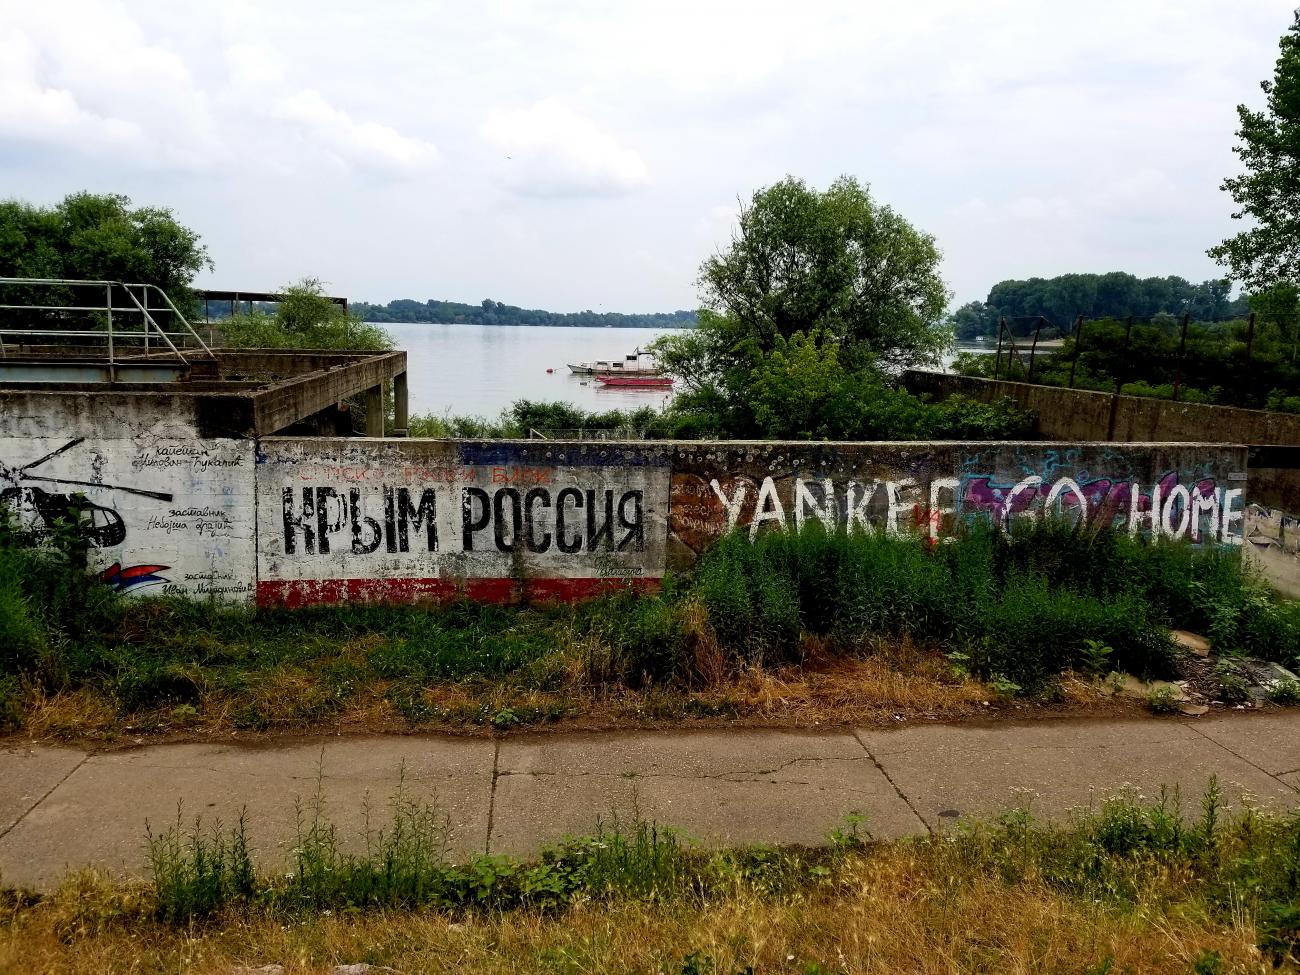 A graffiti wall a bit outside Belgrade, Serbia reads "Yankee Go Home"